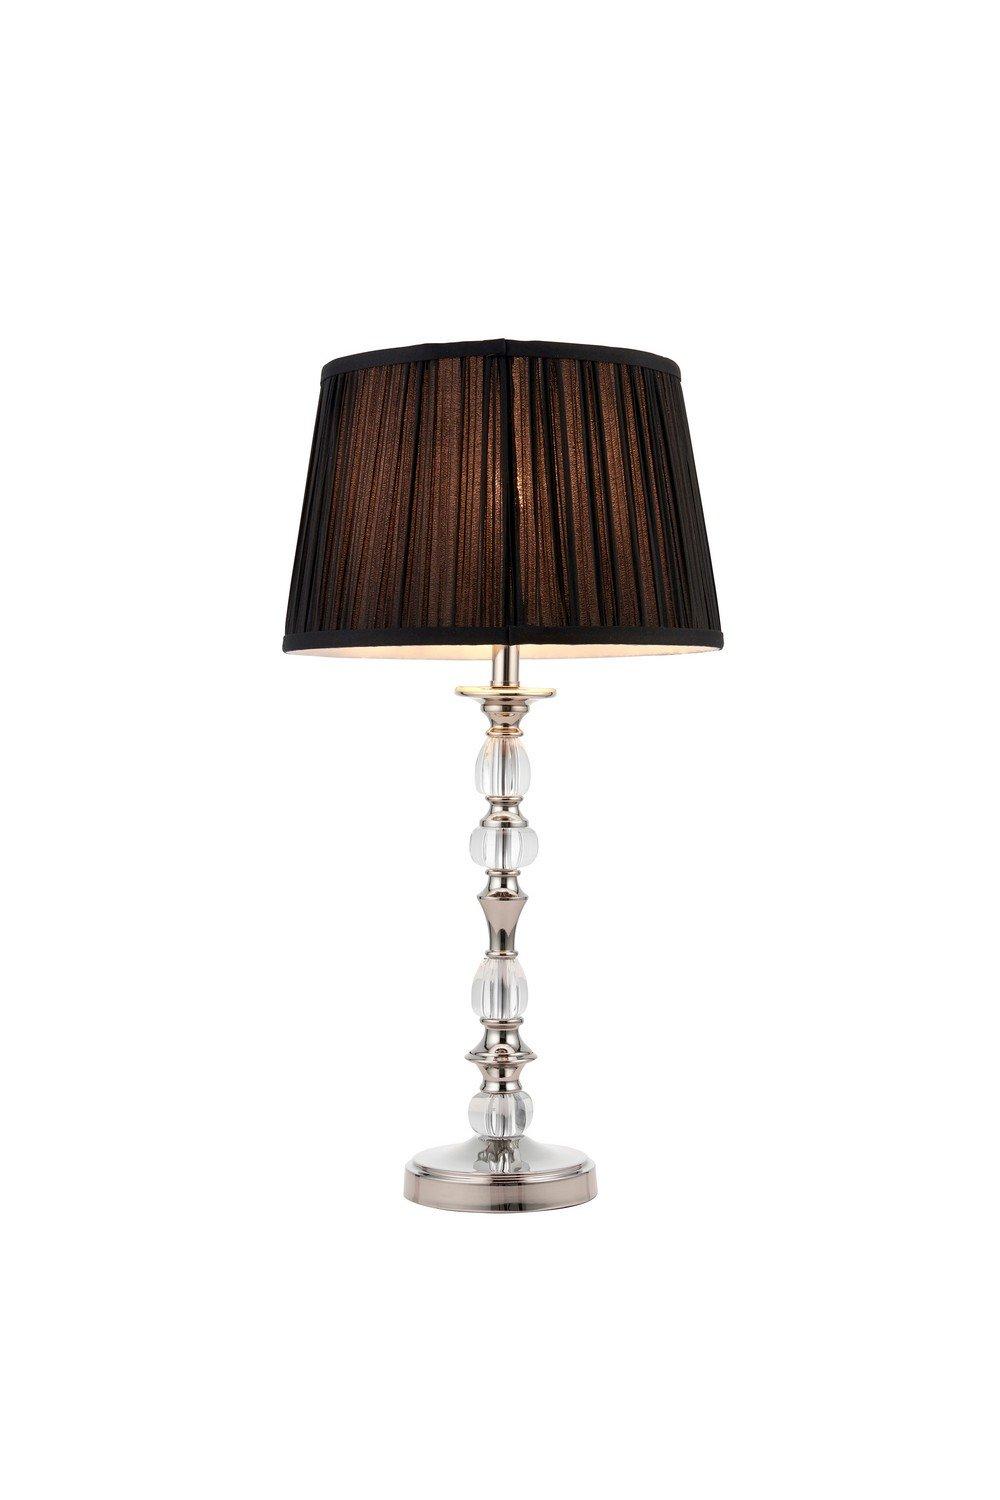 Polina 1 Light Medium Table Lamp Polished Nickel Plate with Black Shade E27